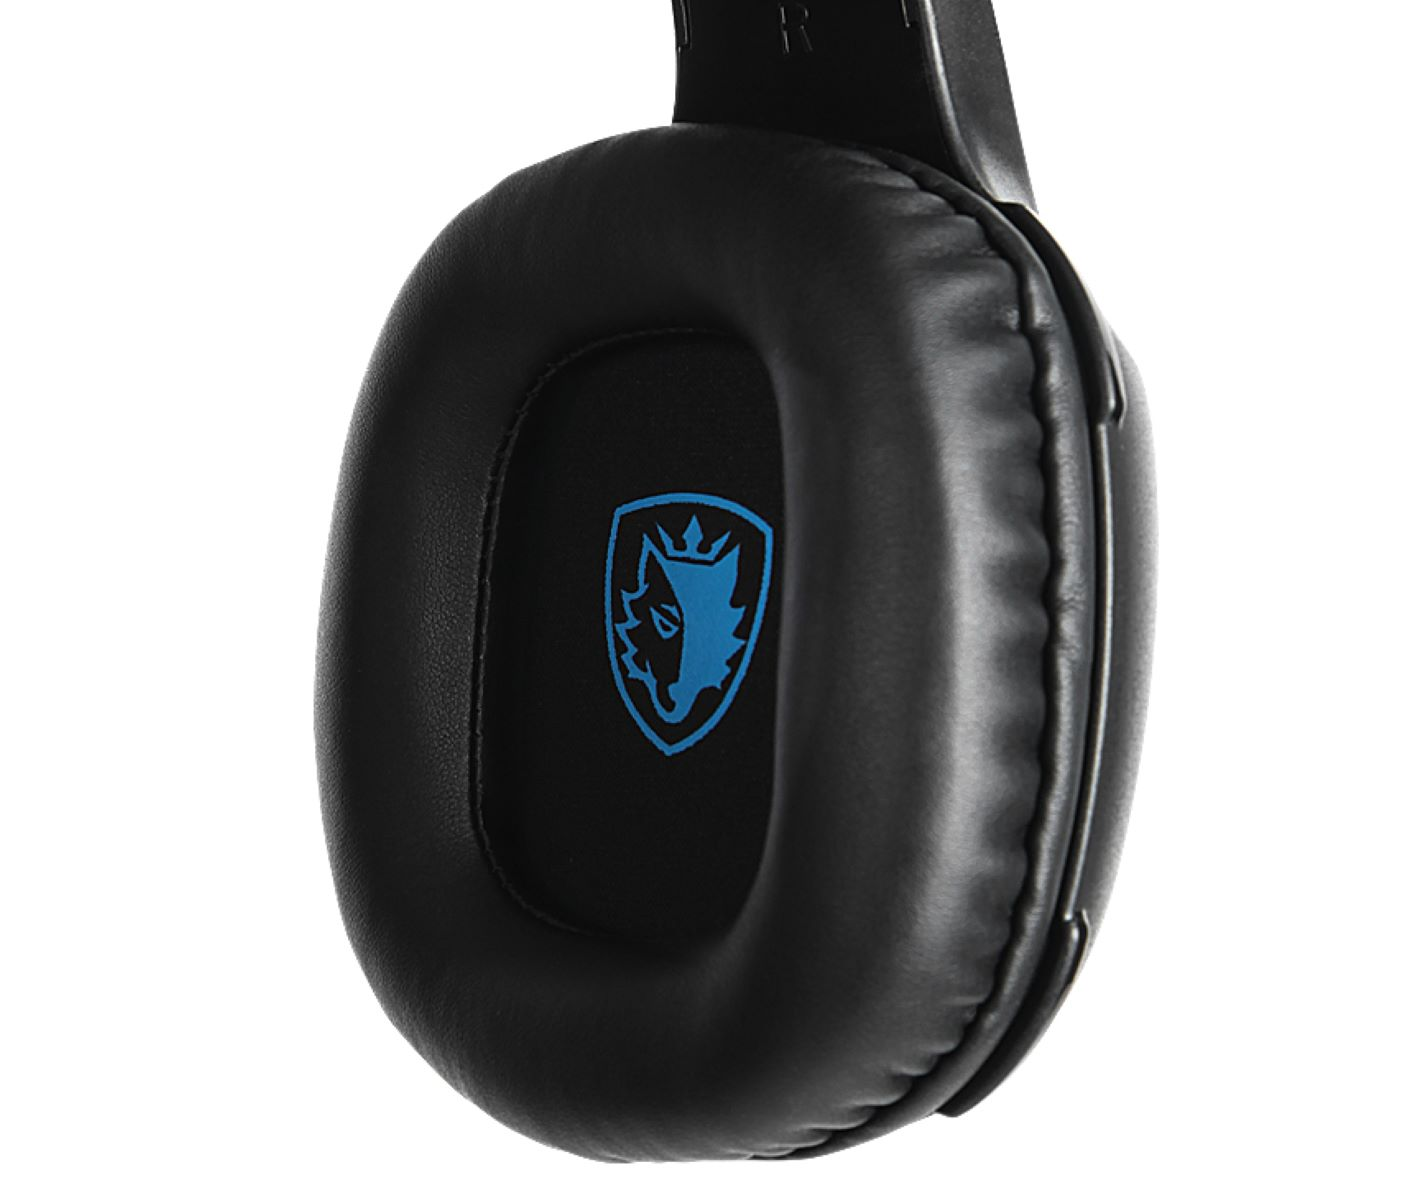 schwarz/blau SADES Over-ear Gaming Dazzle Headset SA-905,